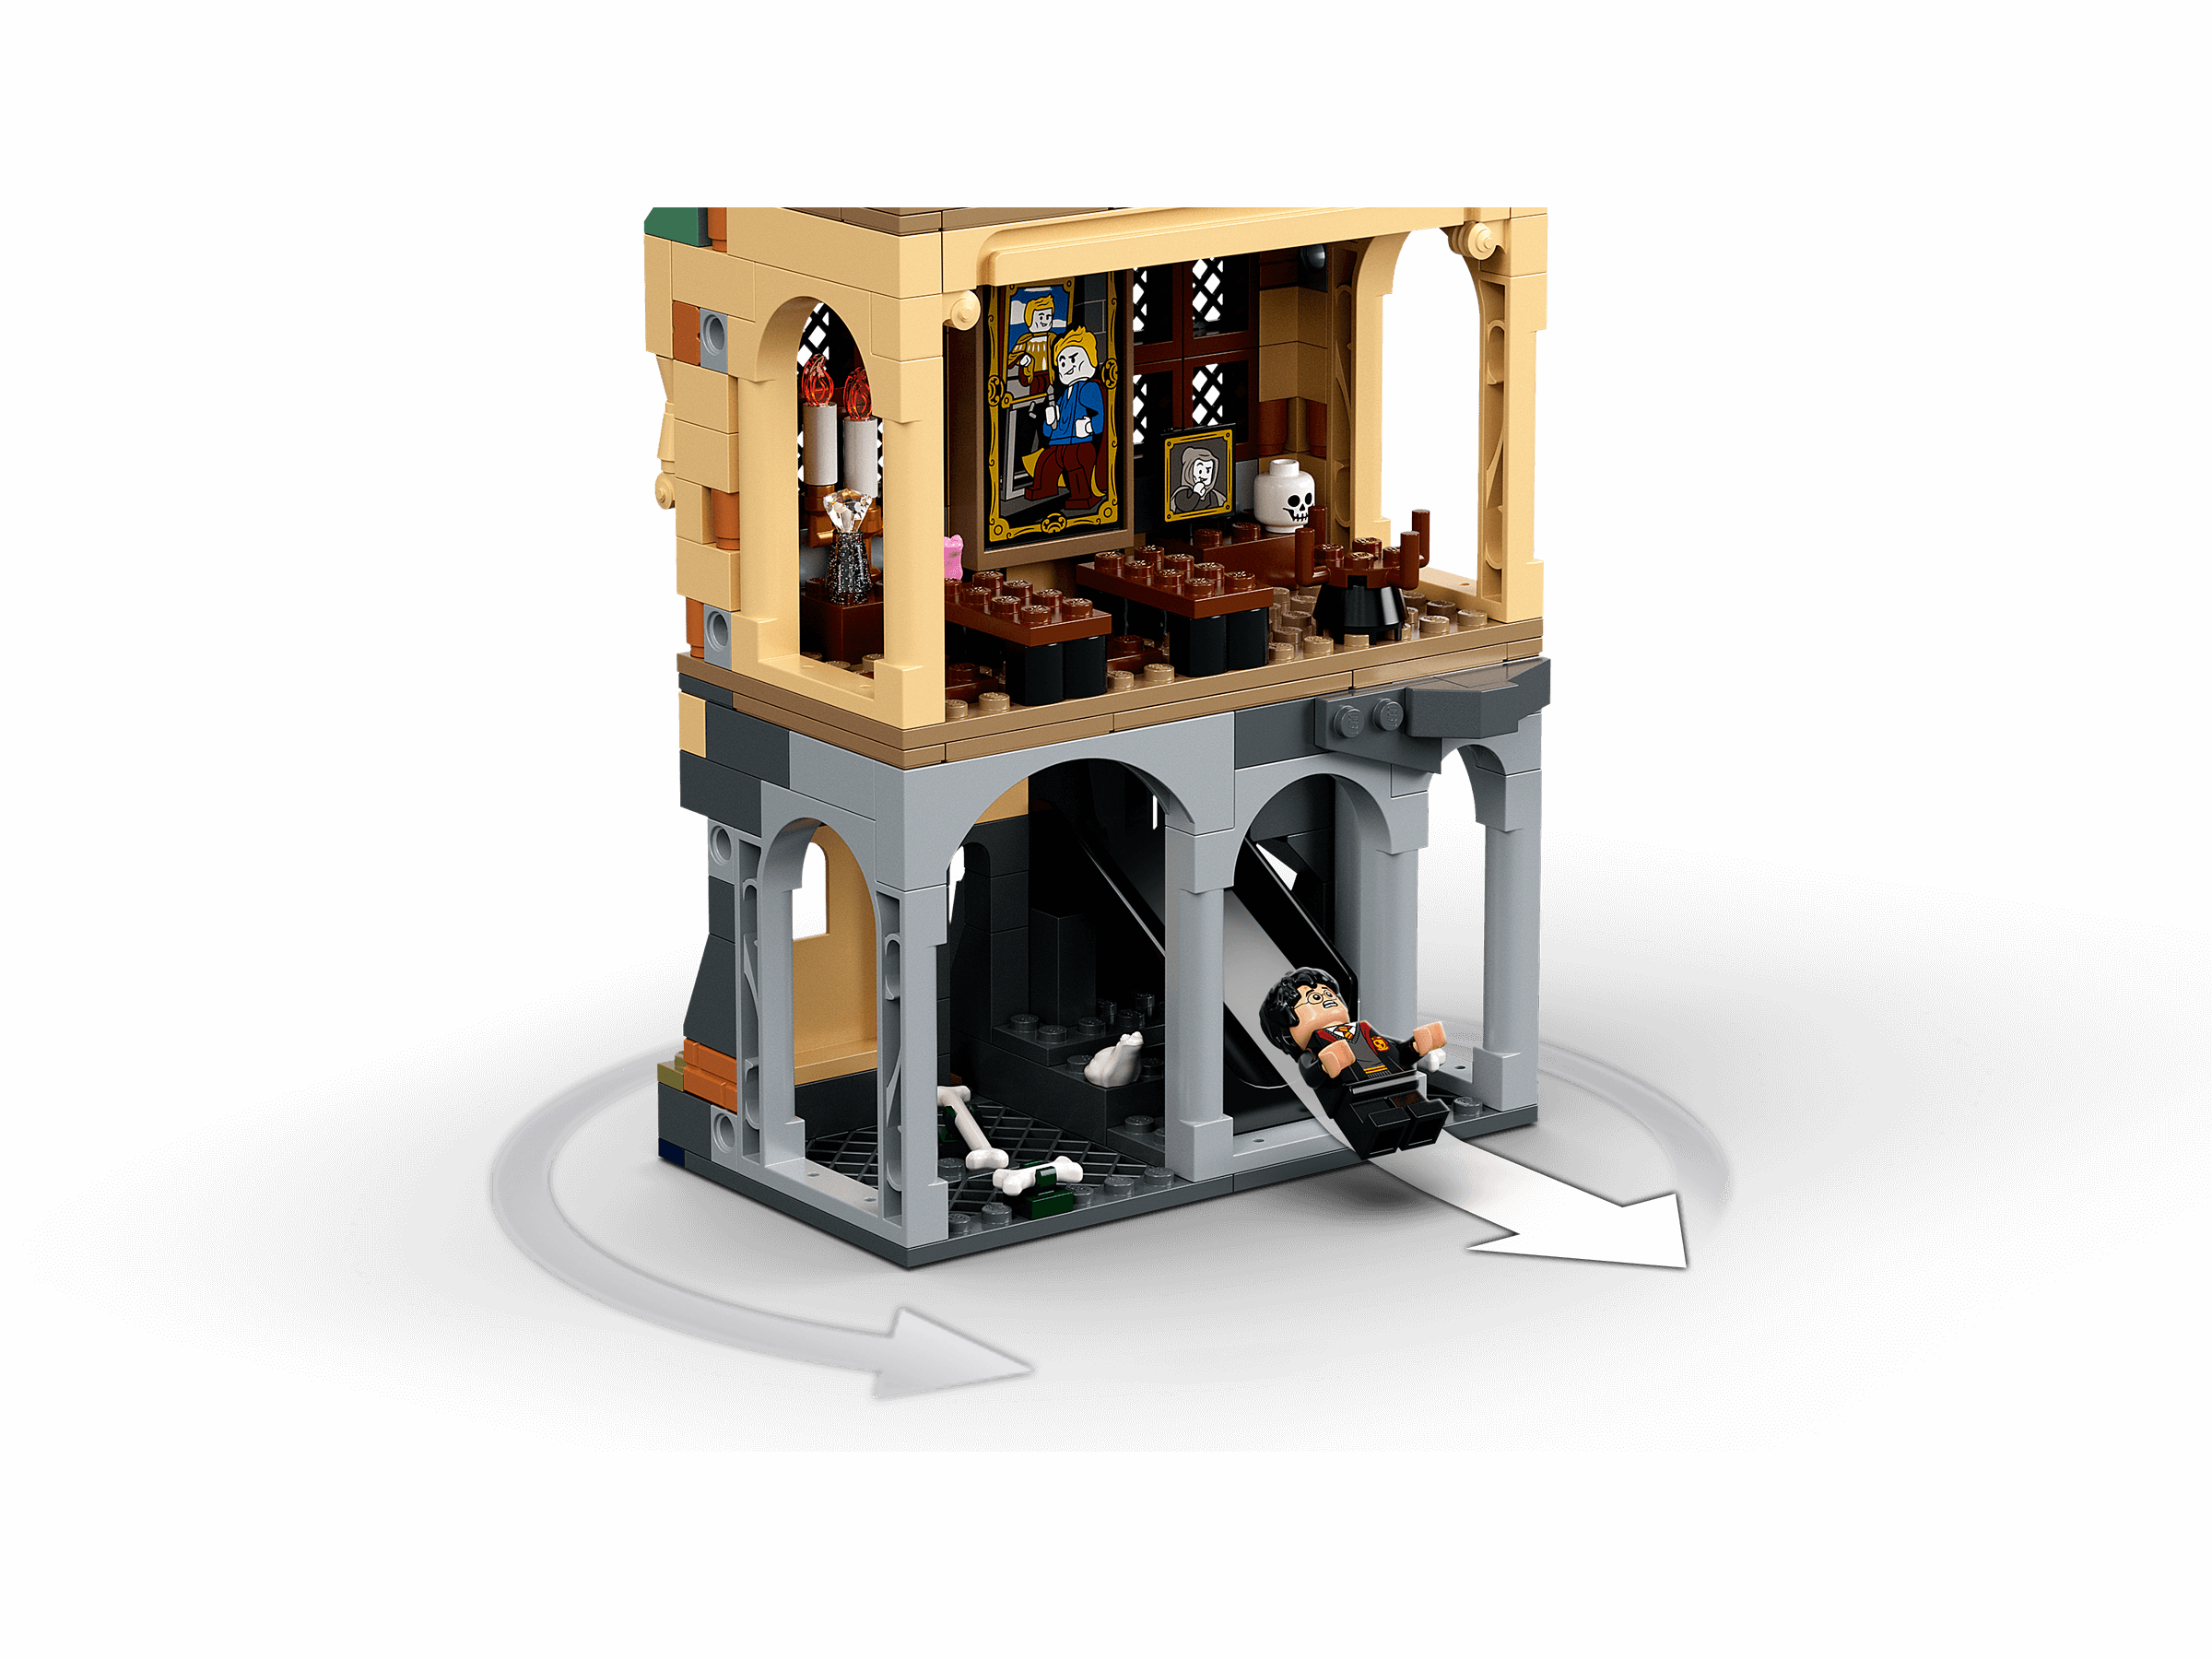 LEGO Harry Potter Hogwarts Chamber of Secrets 76389 Building Set